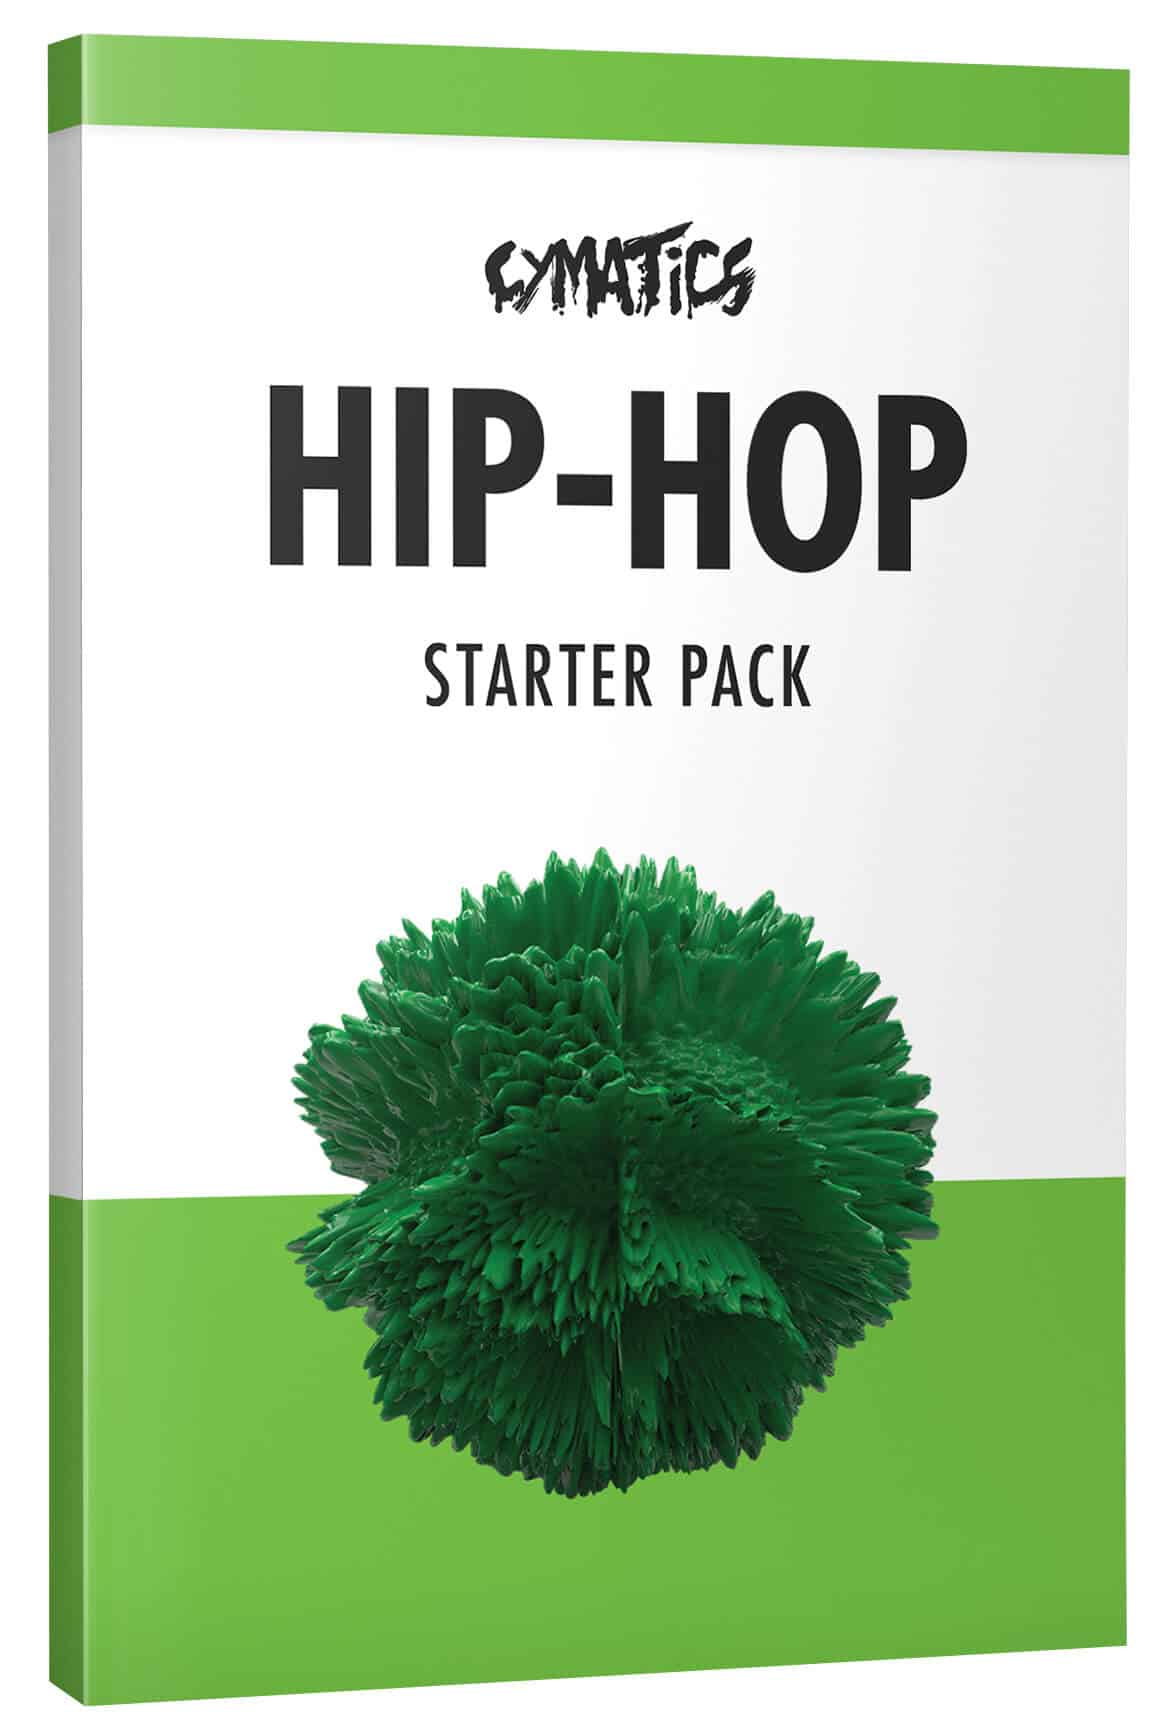 Featured image for “Hip Hop Starter Pack”